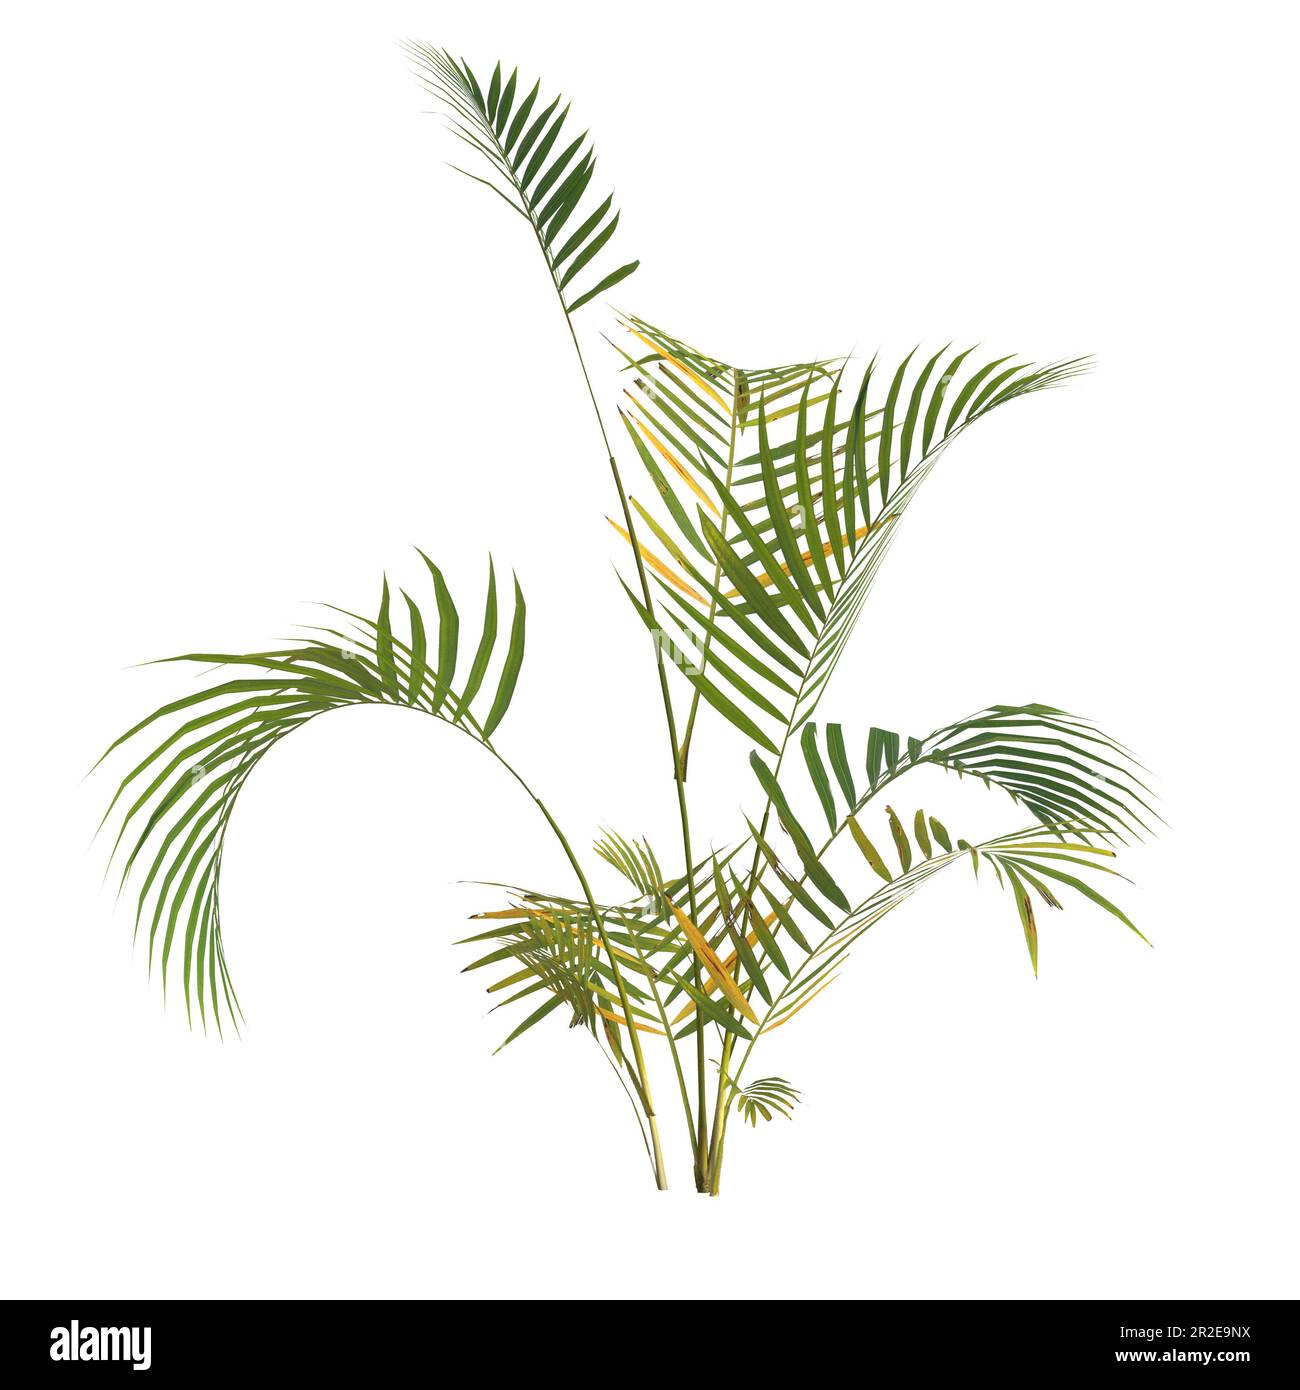 3d illustration of areca palm plant isolated on white background Stock Photo